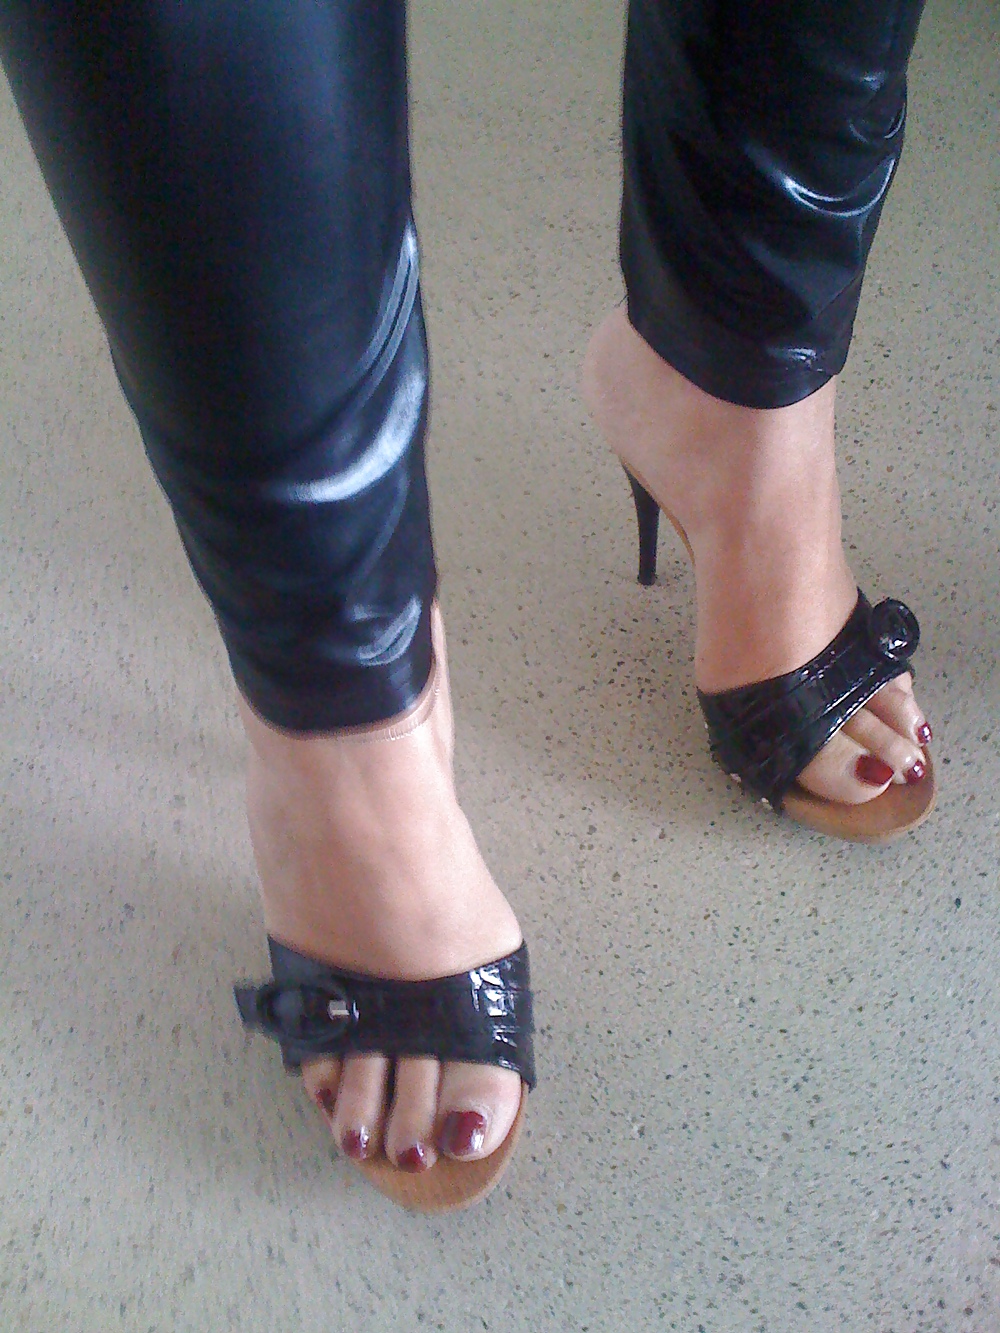 My mom's heel and stocking #2829009